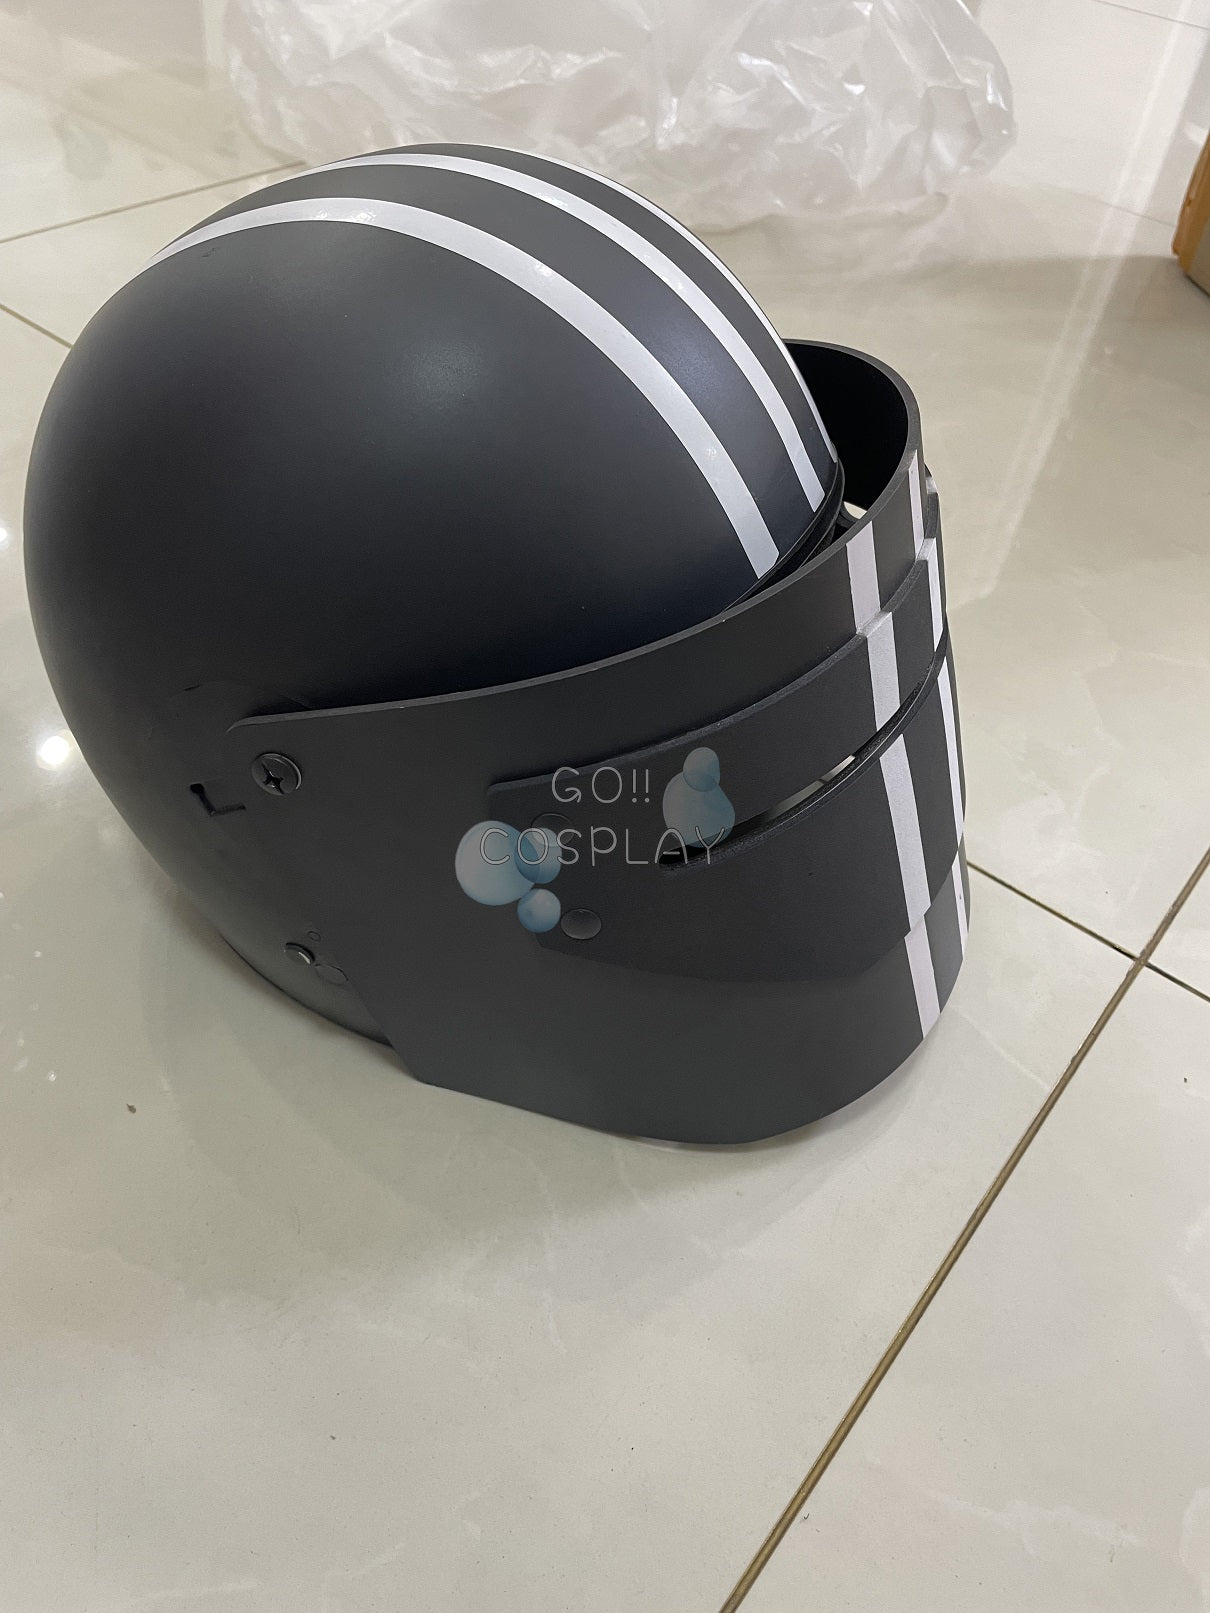 Killa Helmet Escape from Tarkov Cosplay Buy